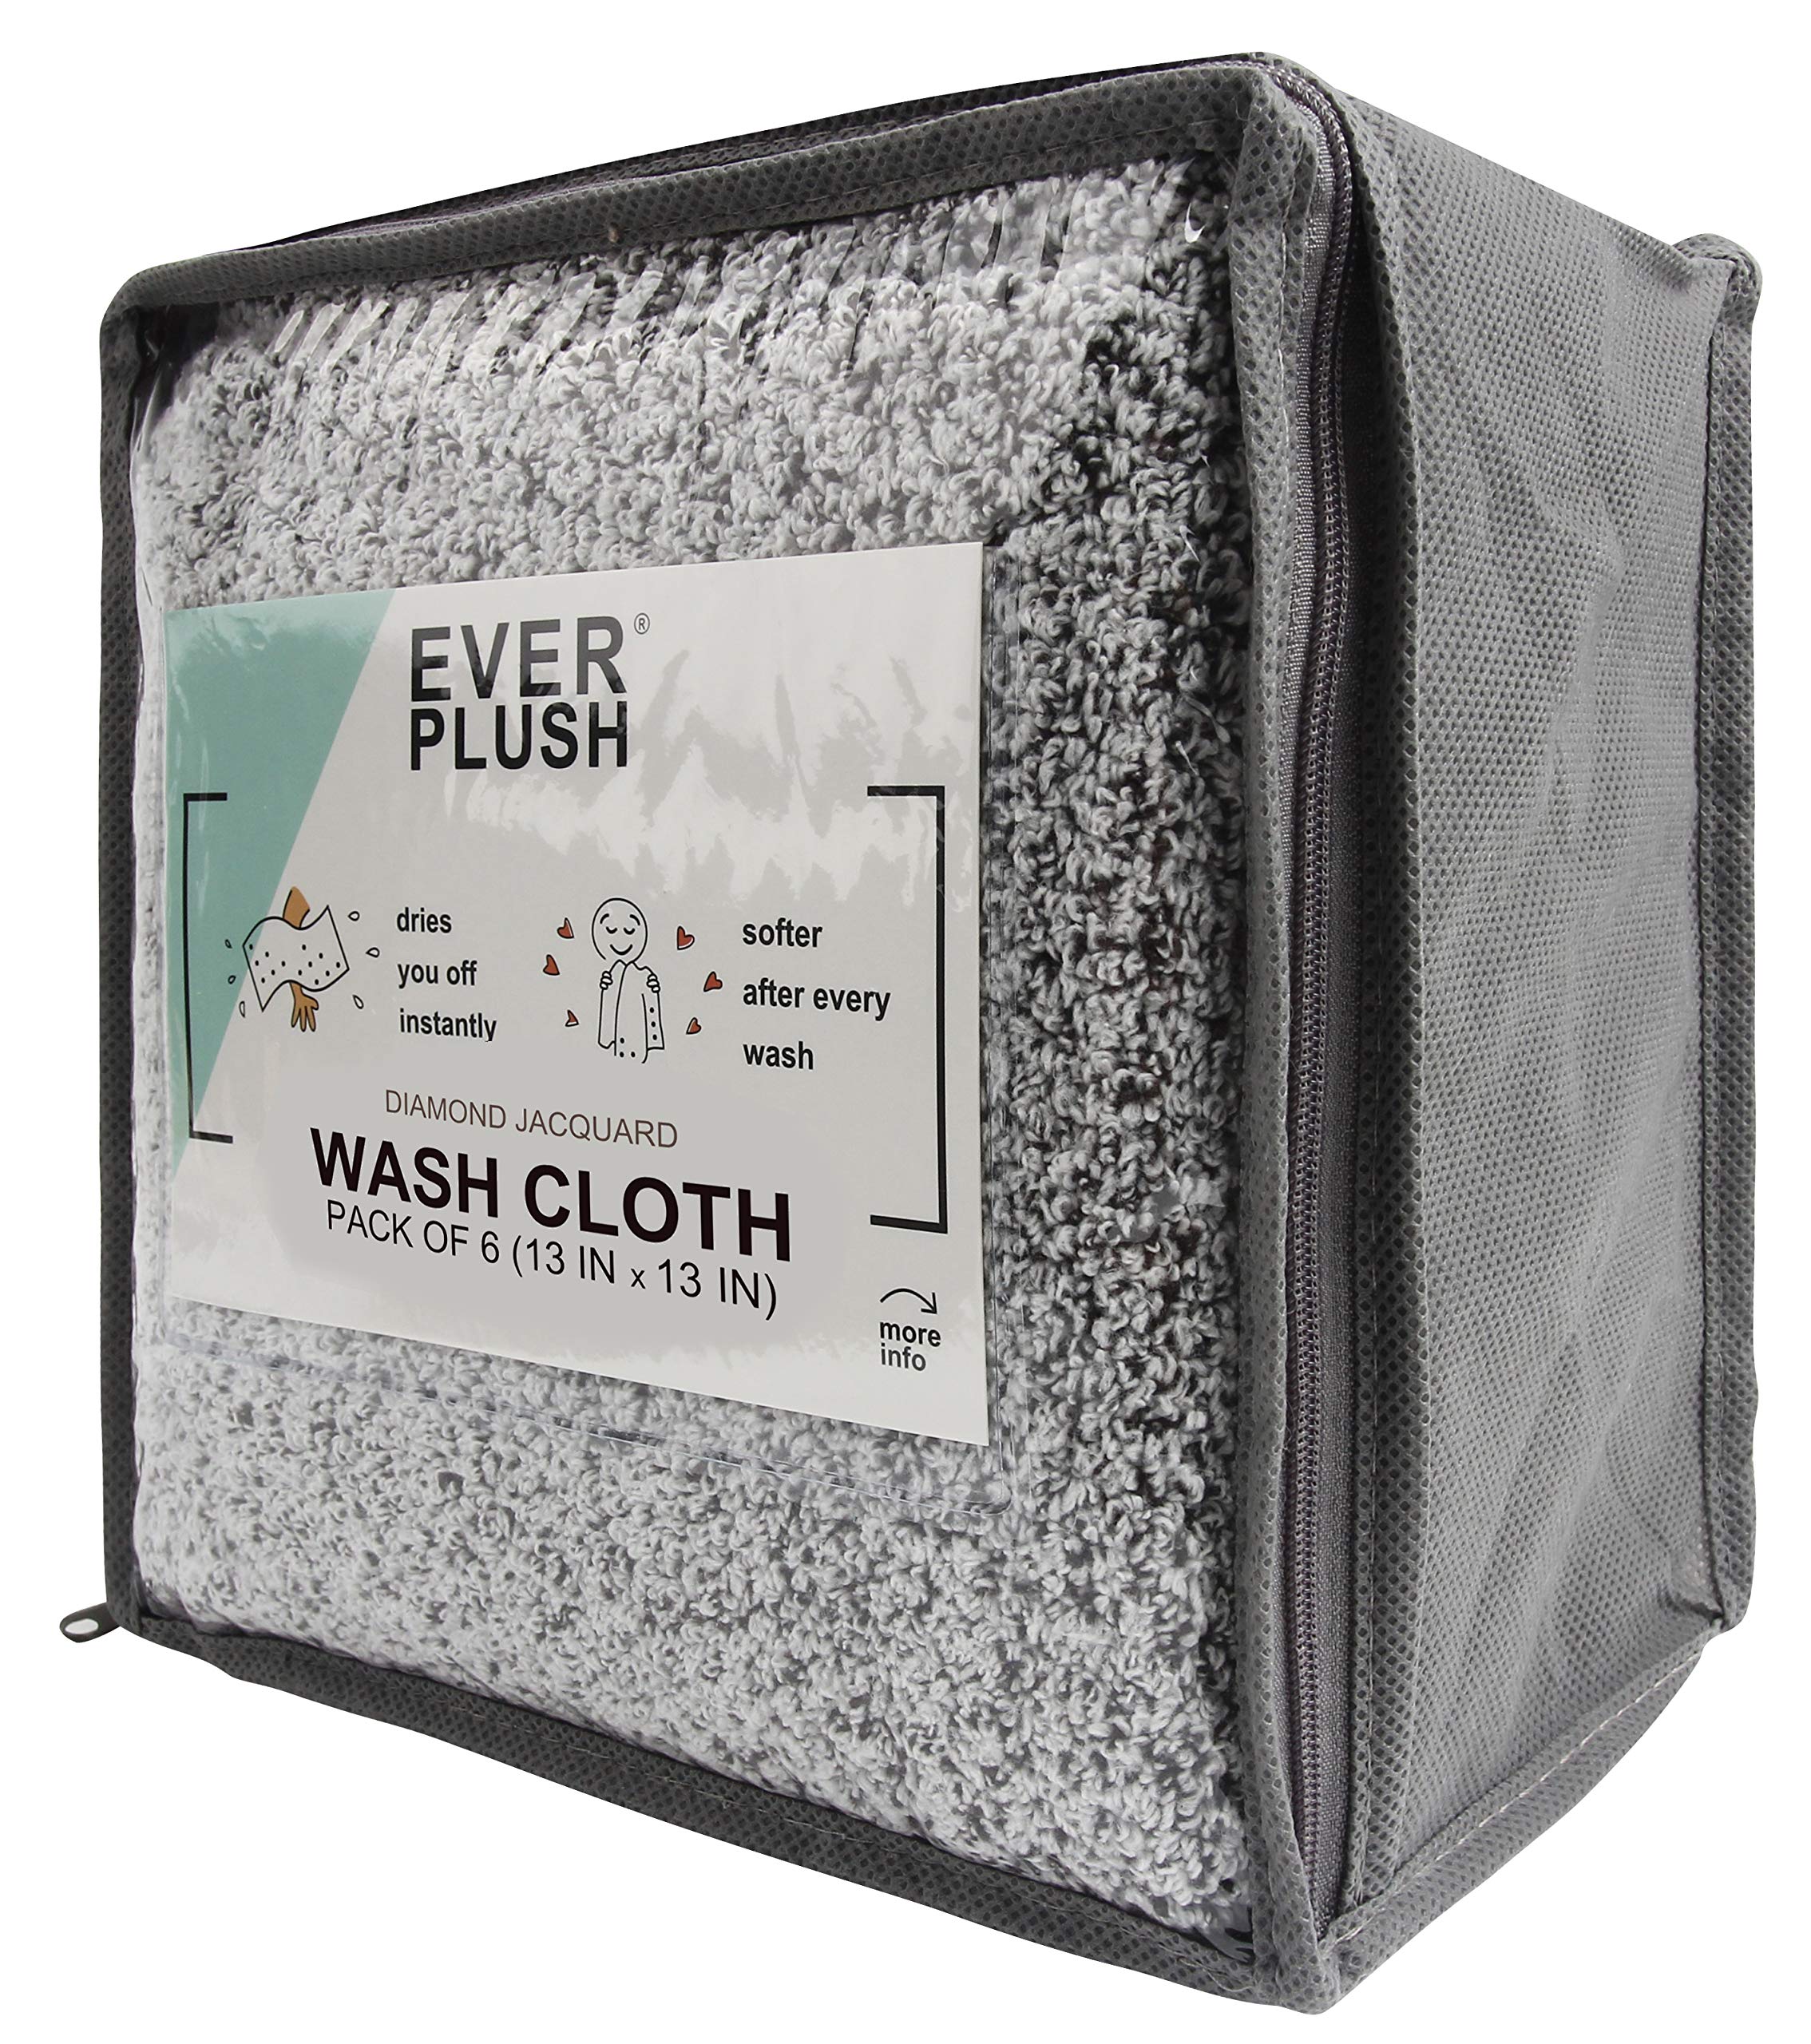 Everplush Diamond Jacquard Bath Linens Wash Cloth, 6 Pack, 13